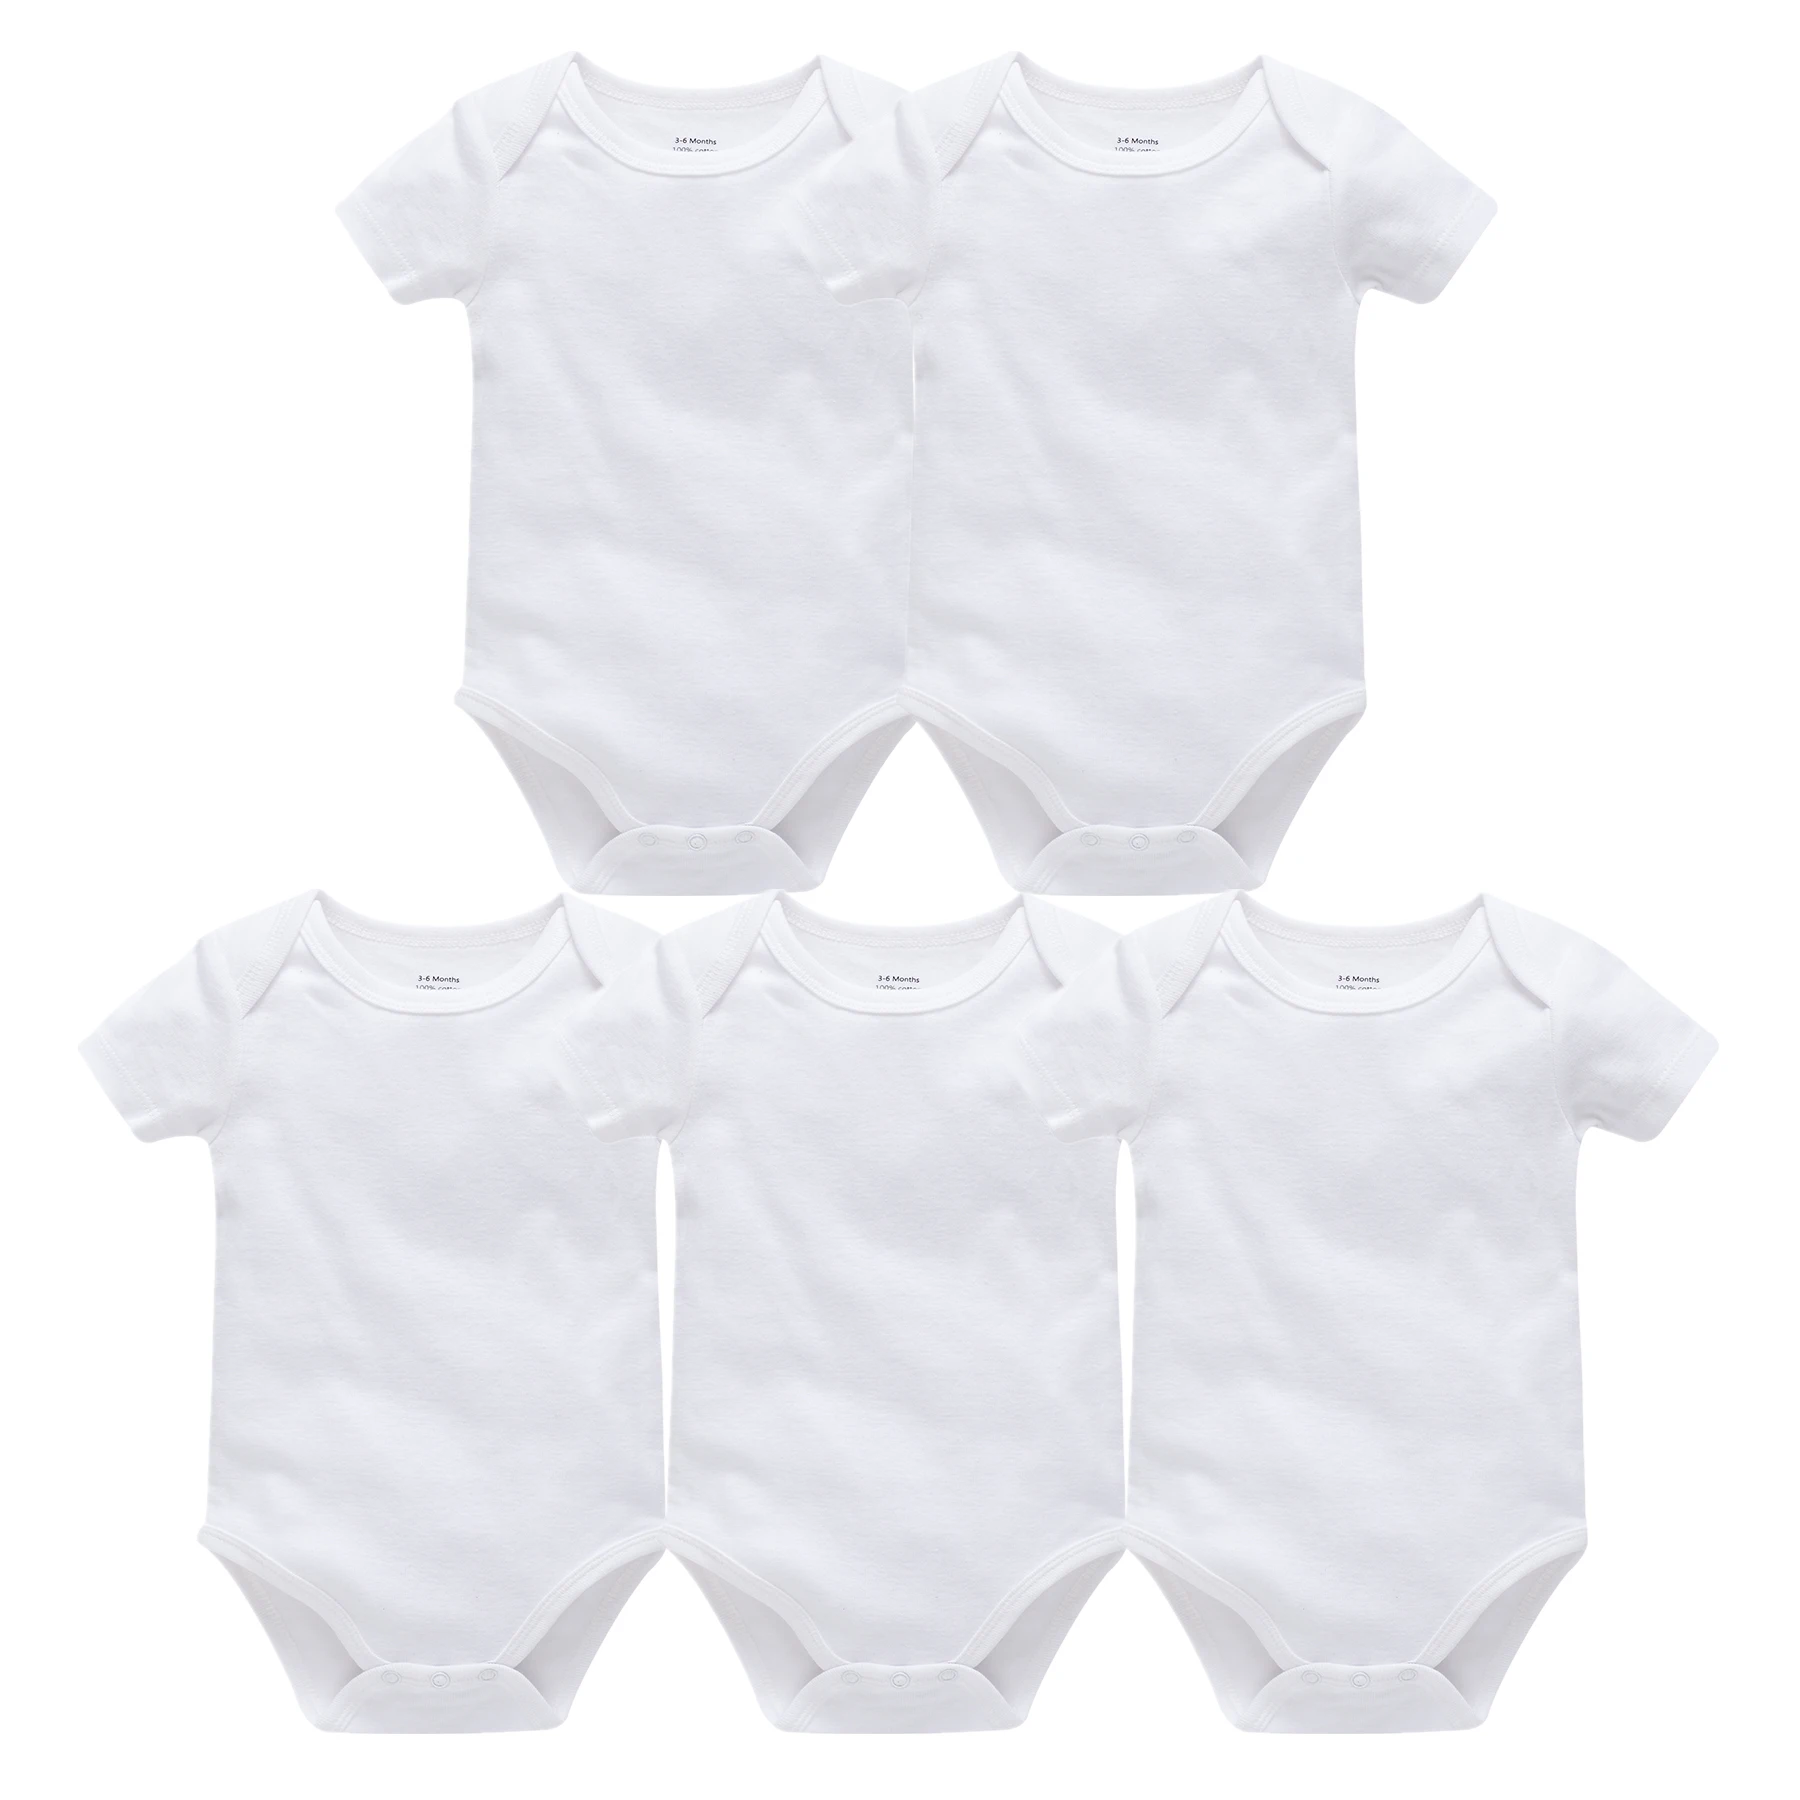 Tanio Toddler Baby Clothing Cotton Summer Boy Sleepsuit sklep